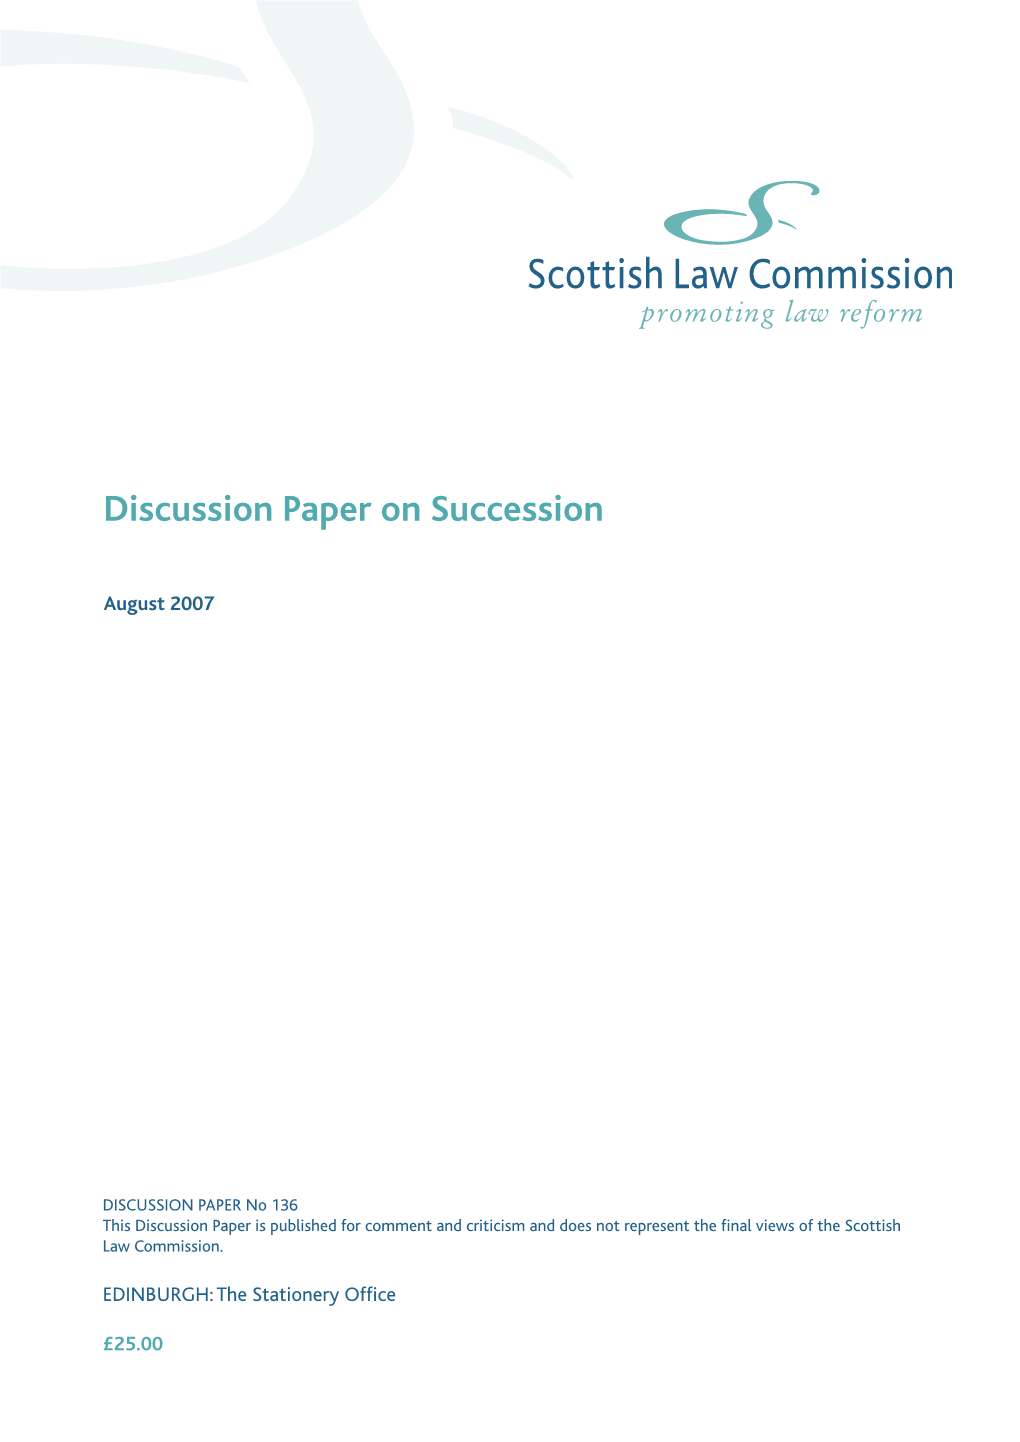 Discussion Paper on Succession (DP 136)